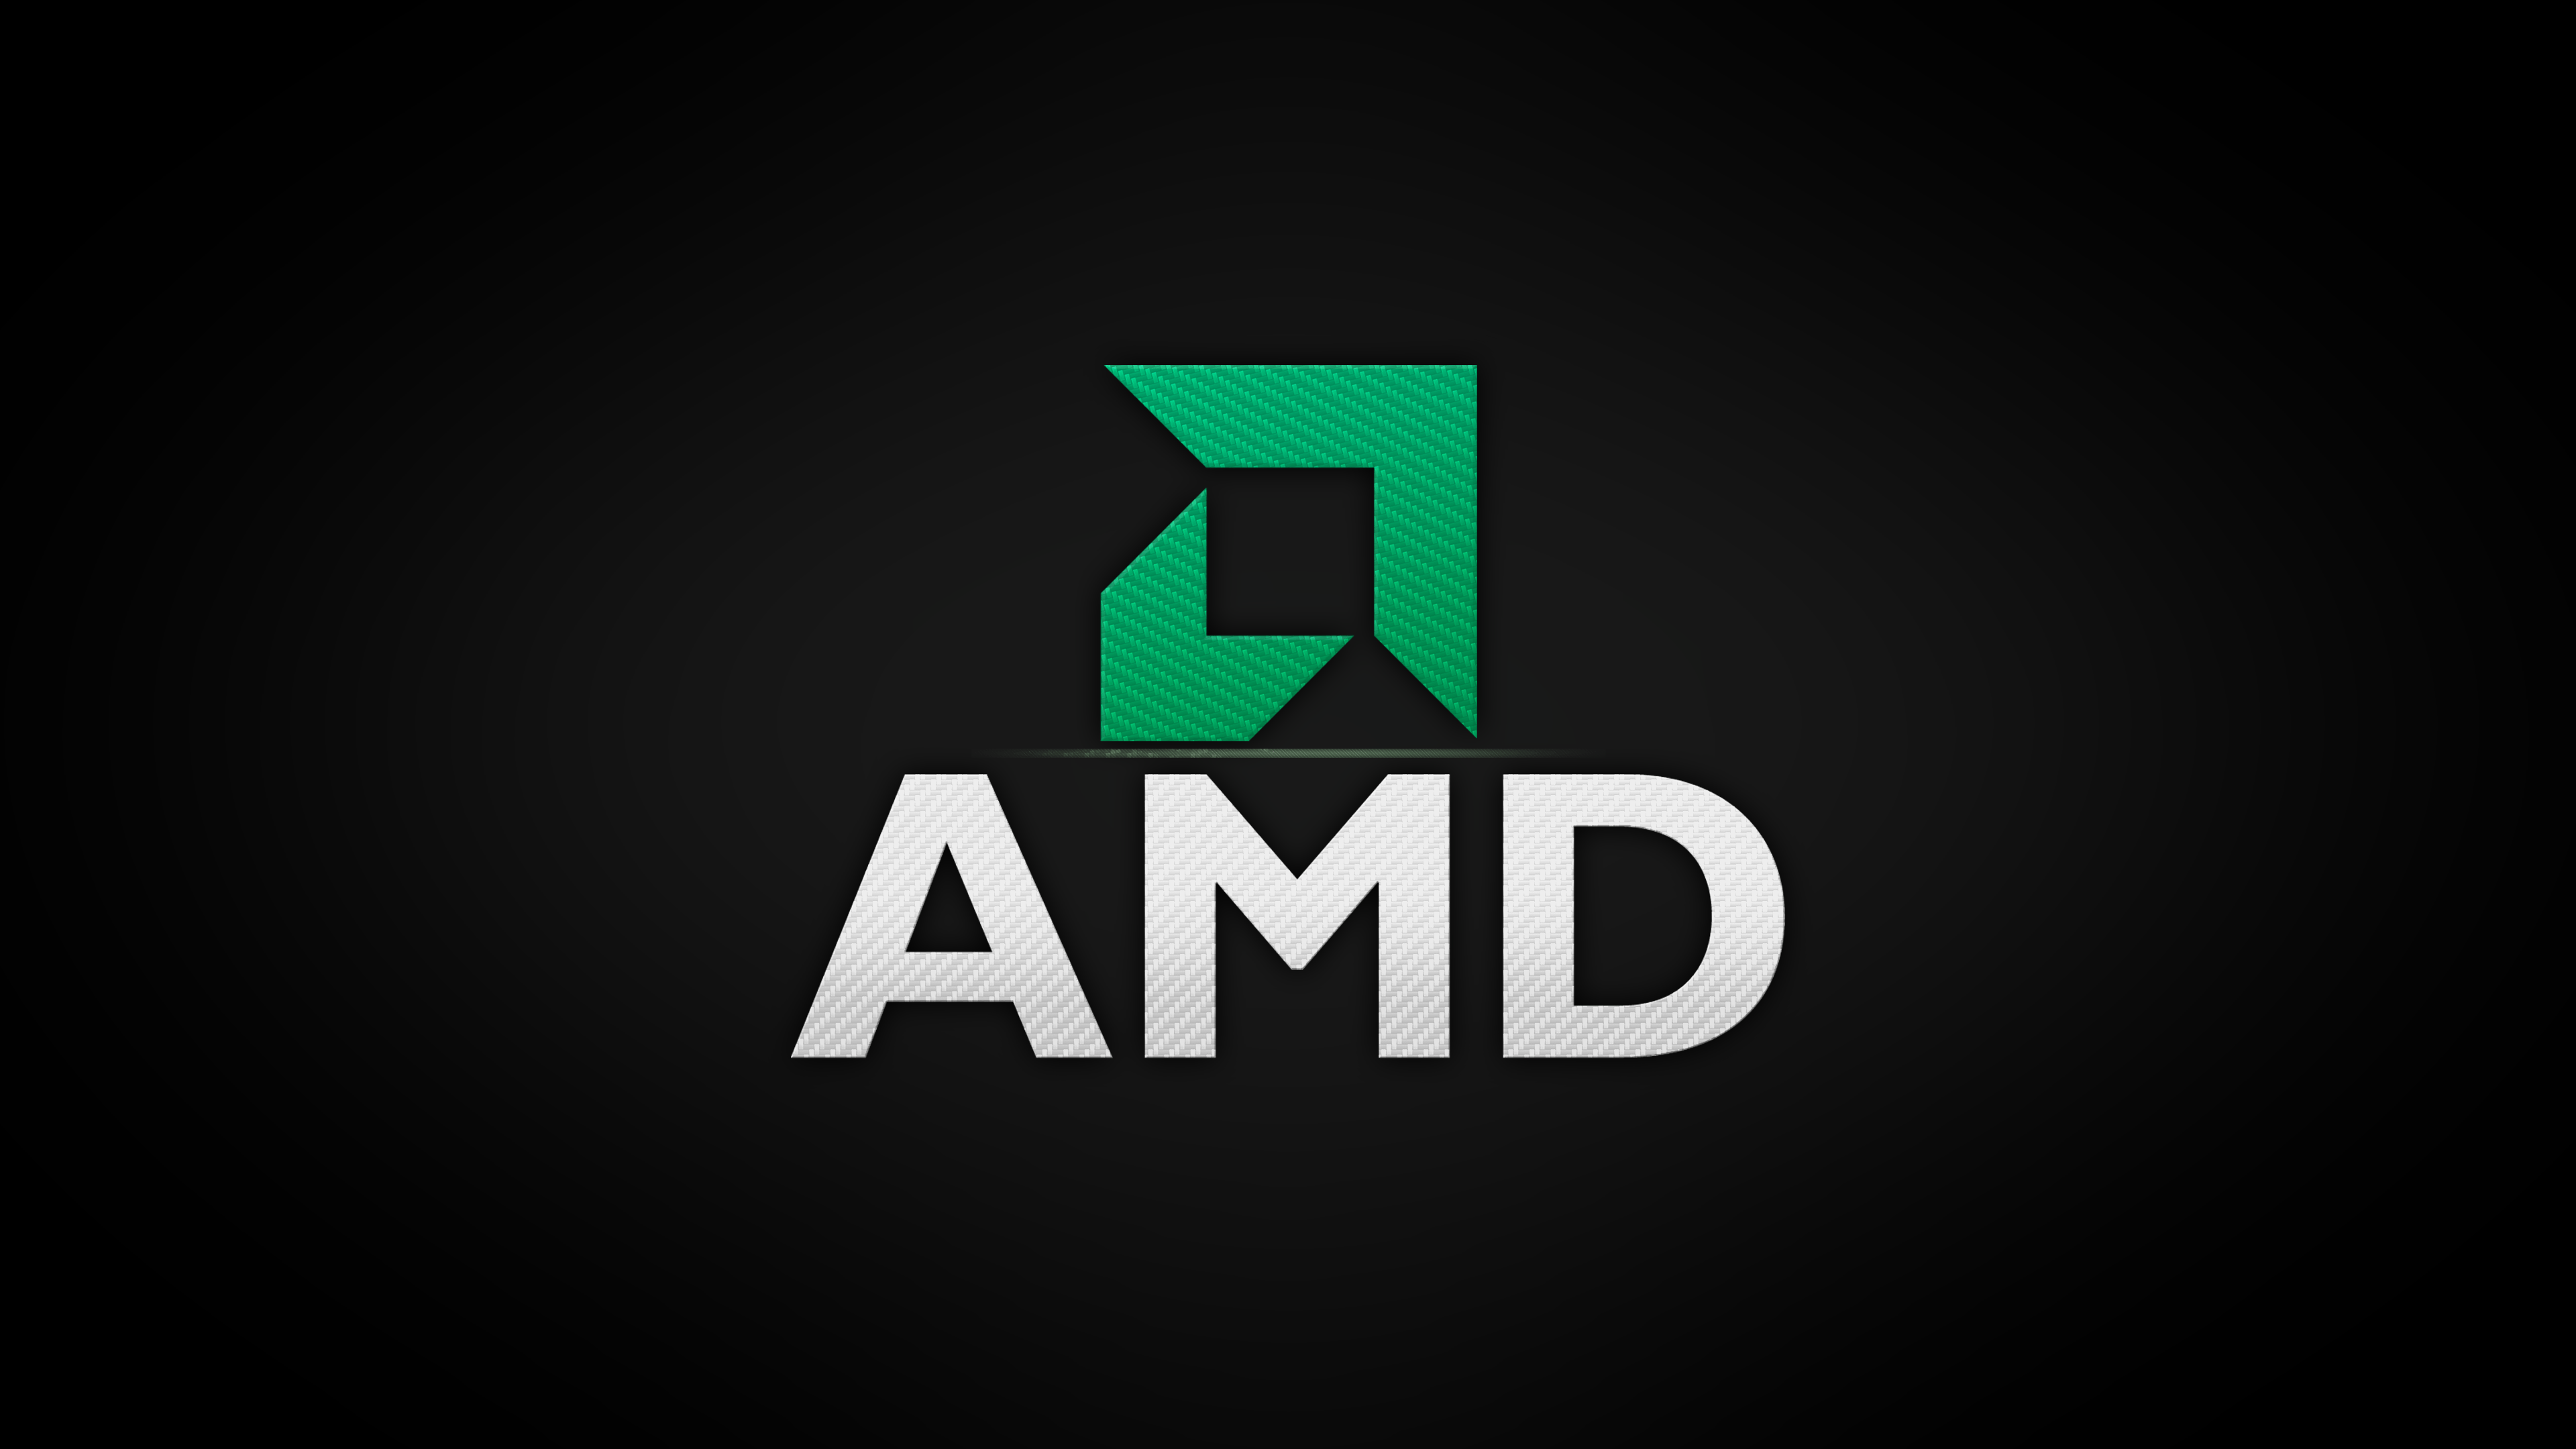 AMD Logo - Amd Brand Logo, HD Logo, 4k Wallpapers, Images, Backgrounds, Photos ...